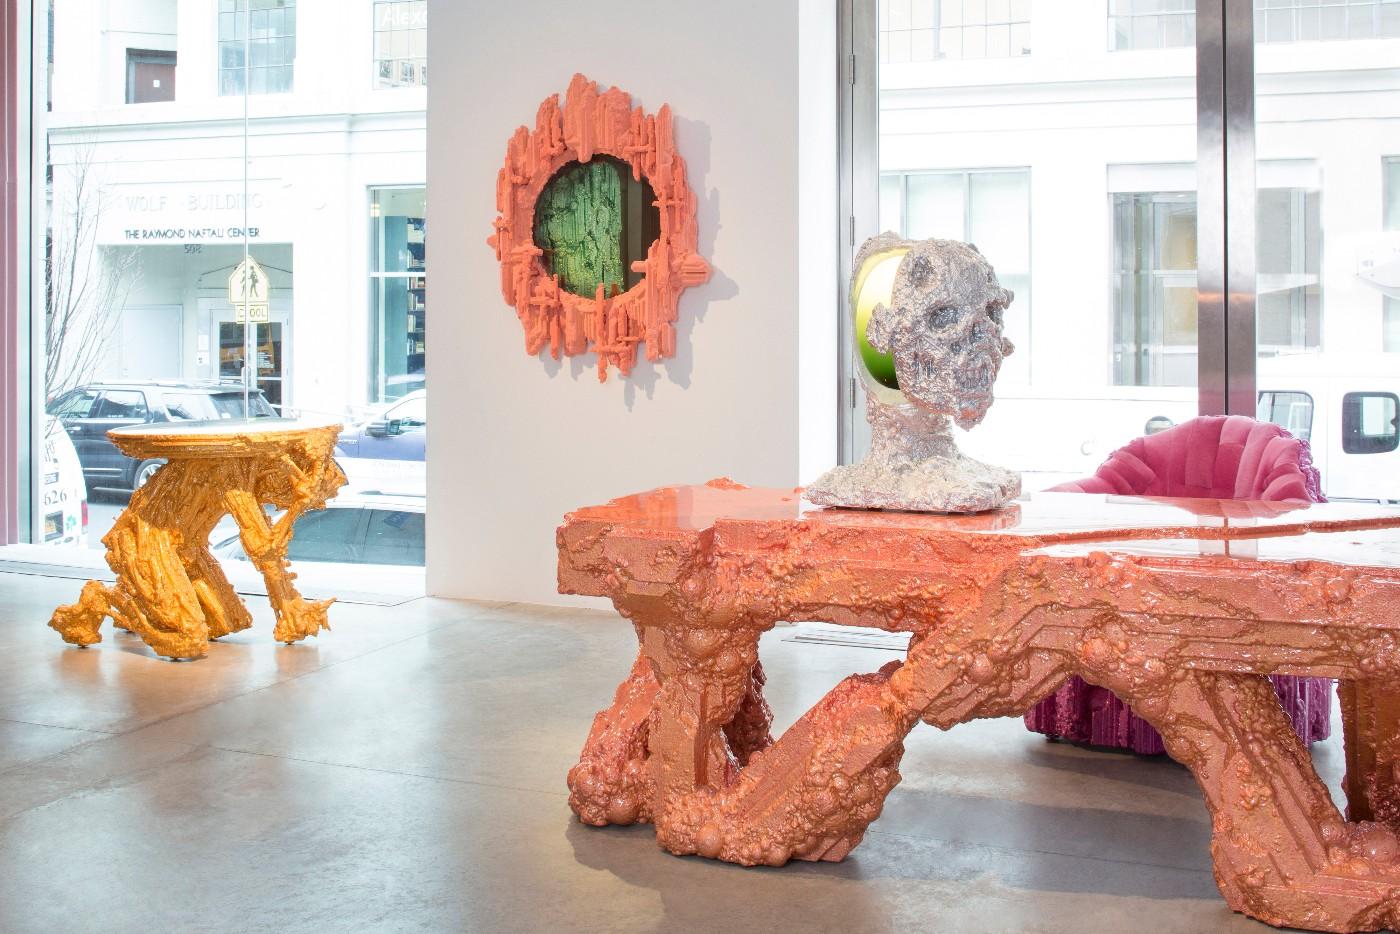 Installation view of Chris Schanck's 'Unhomely' at Friedman Benda.